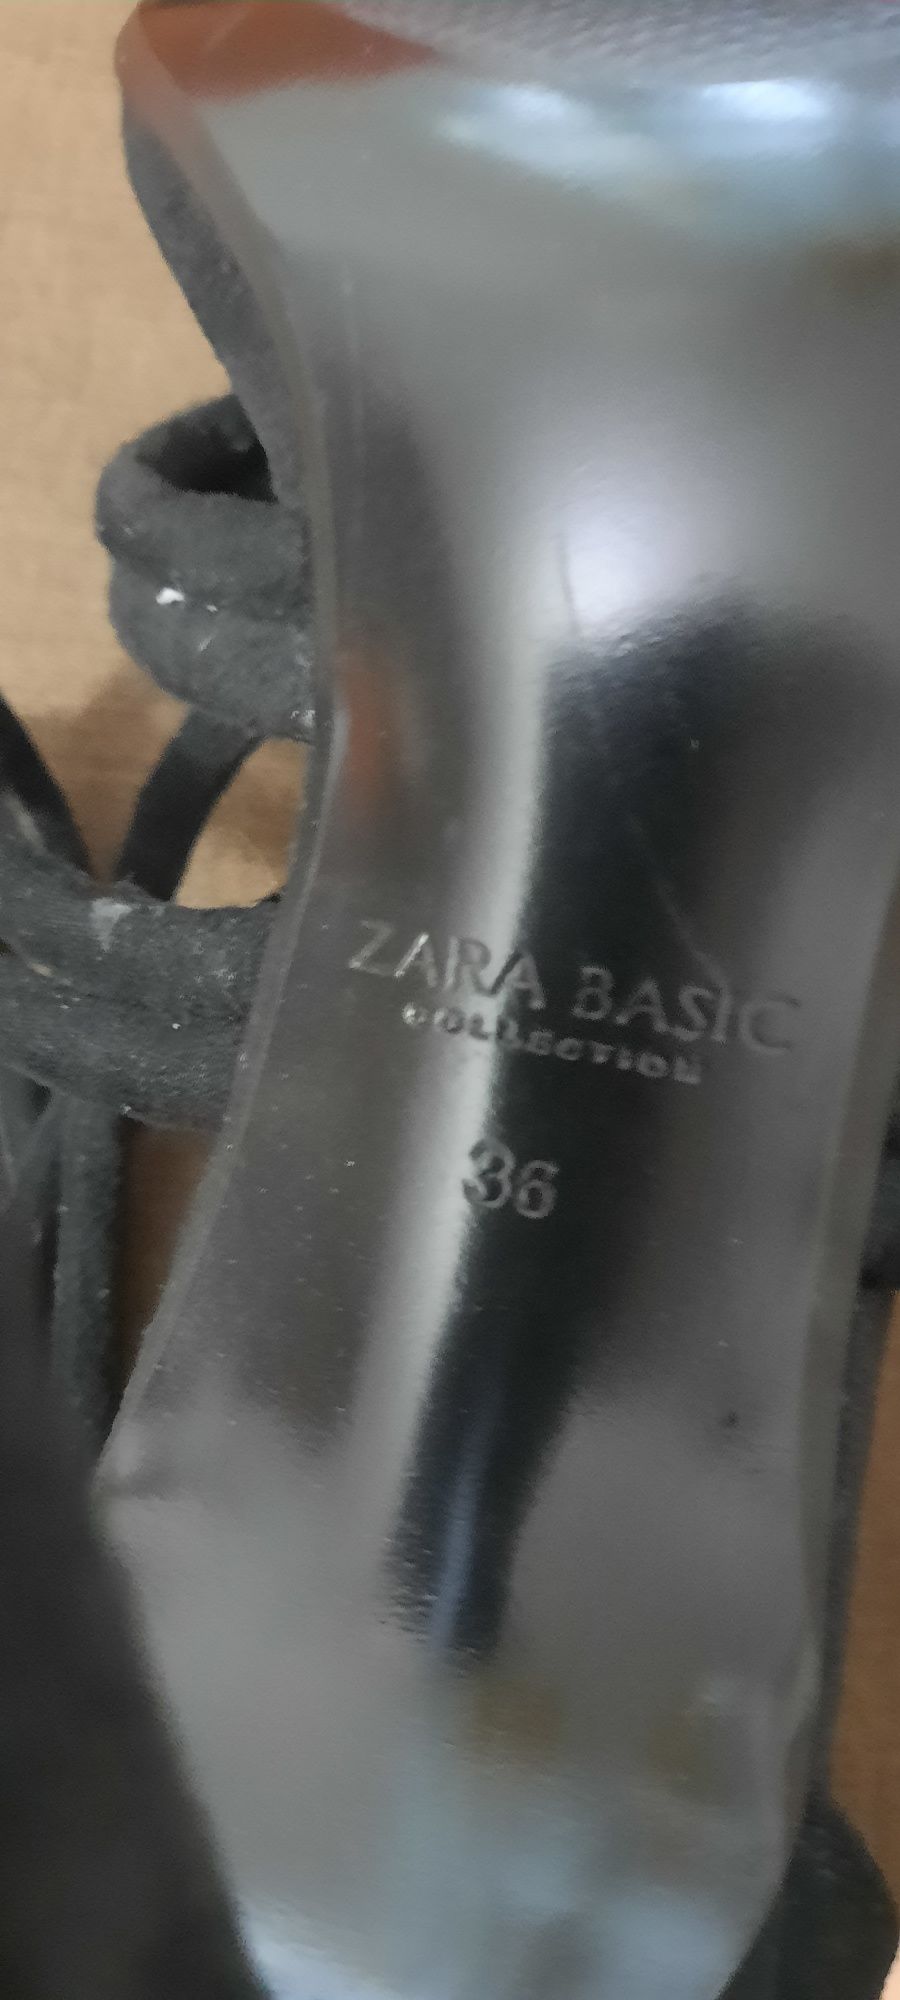 Sandale Zara Basic COLLECTION